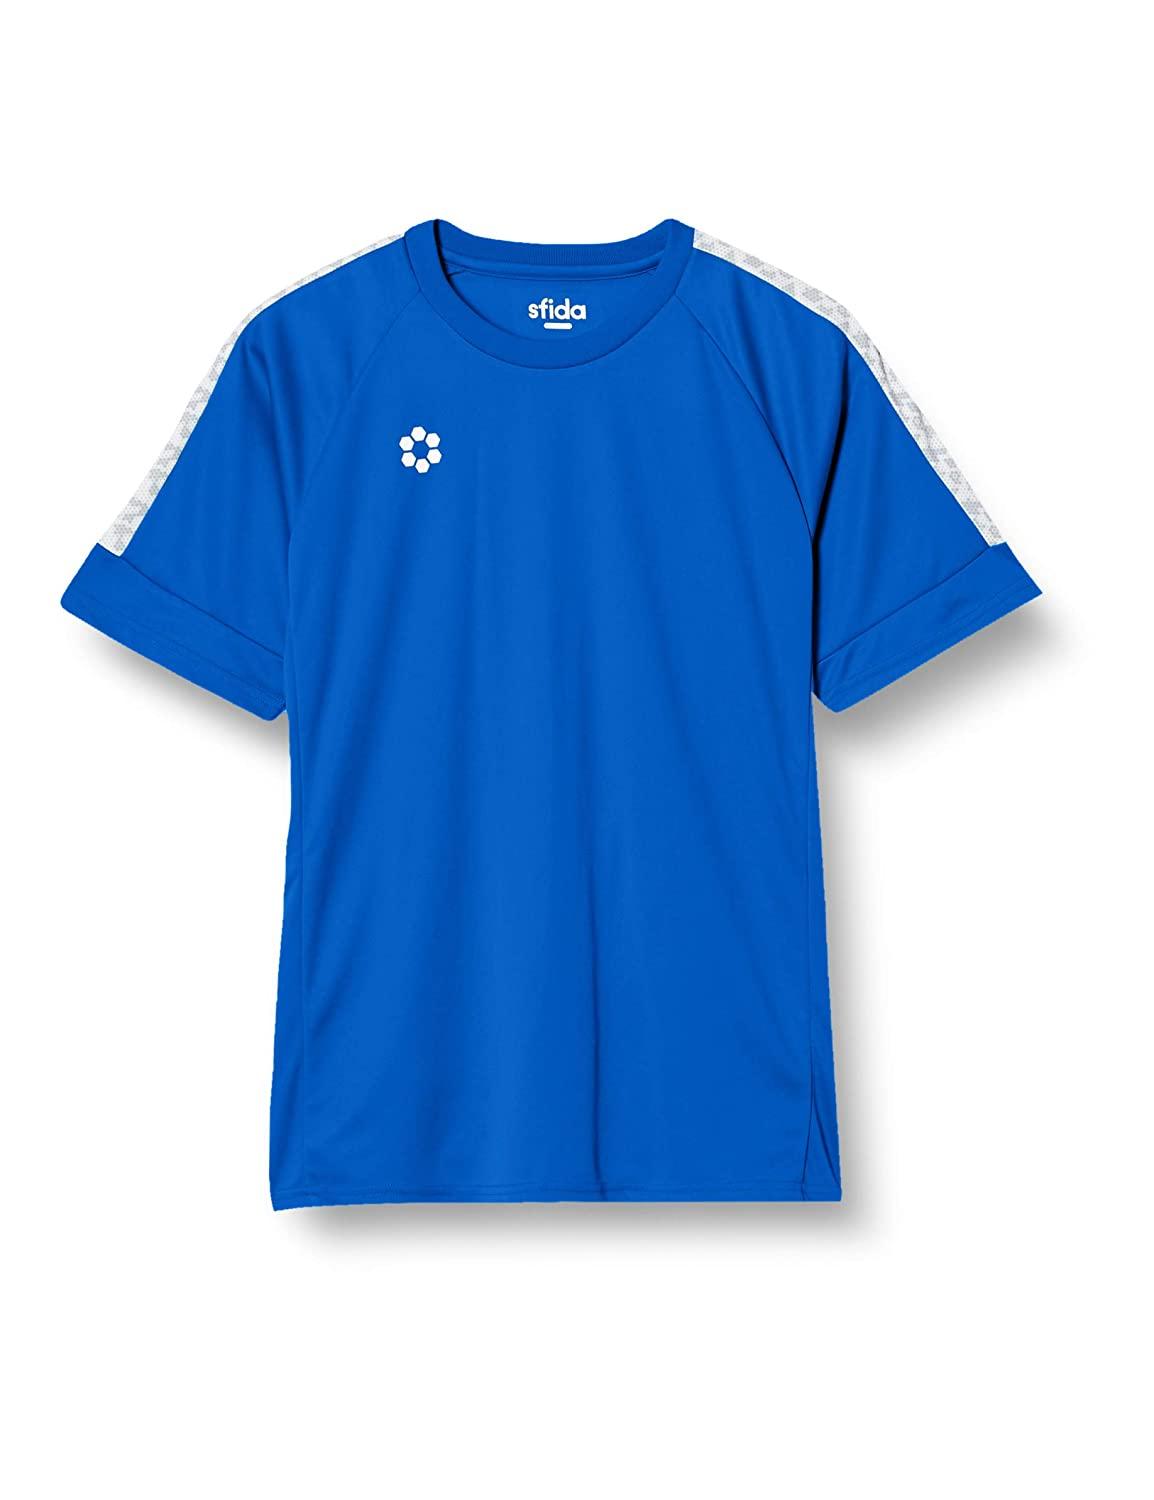 SFIDA(スフィーダ) BPゲームシャツS/S (SA21822) [色 : BLU] [サイズ : 2XL]